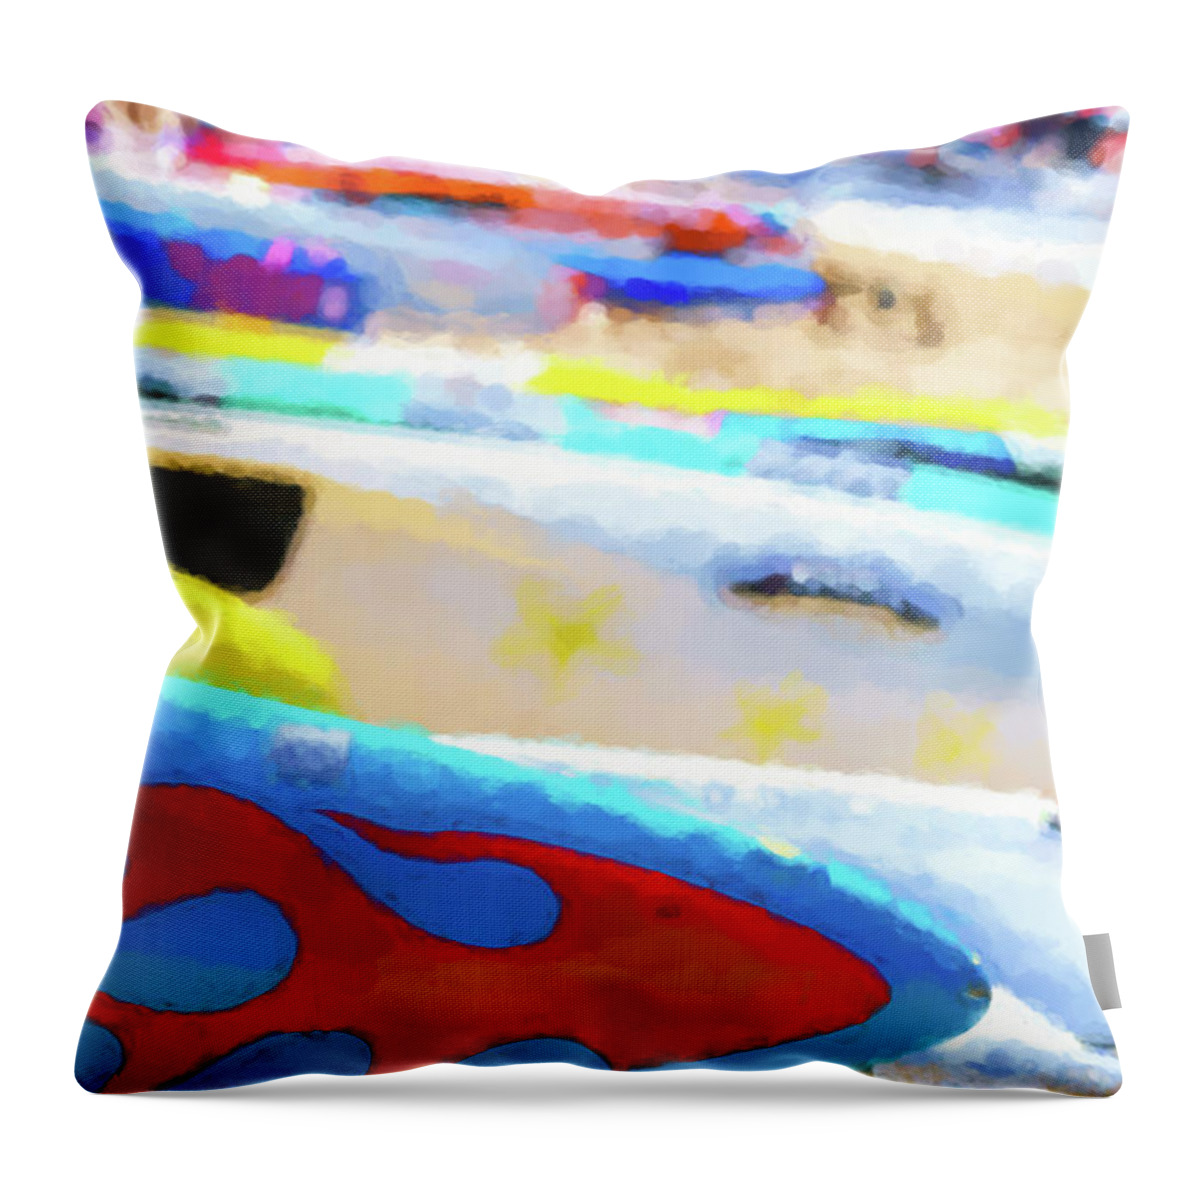 Kayak Throw Pillow featuring the digital art Flaming Kayak Watercolor 3 by Scott Campbell